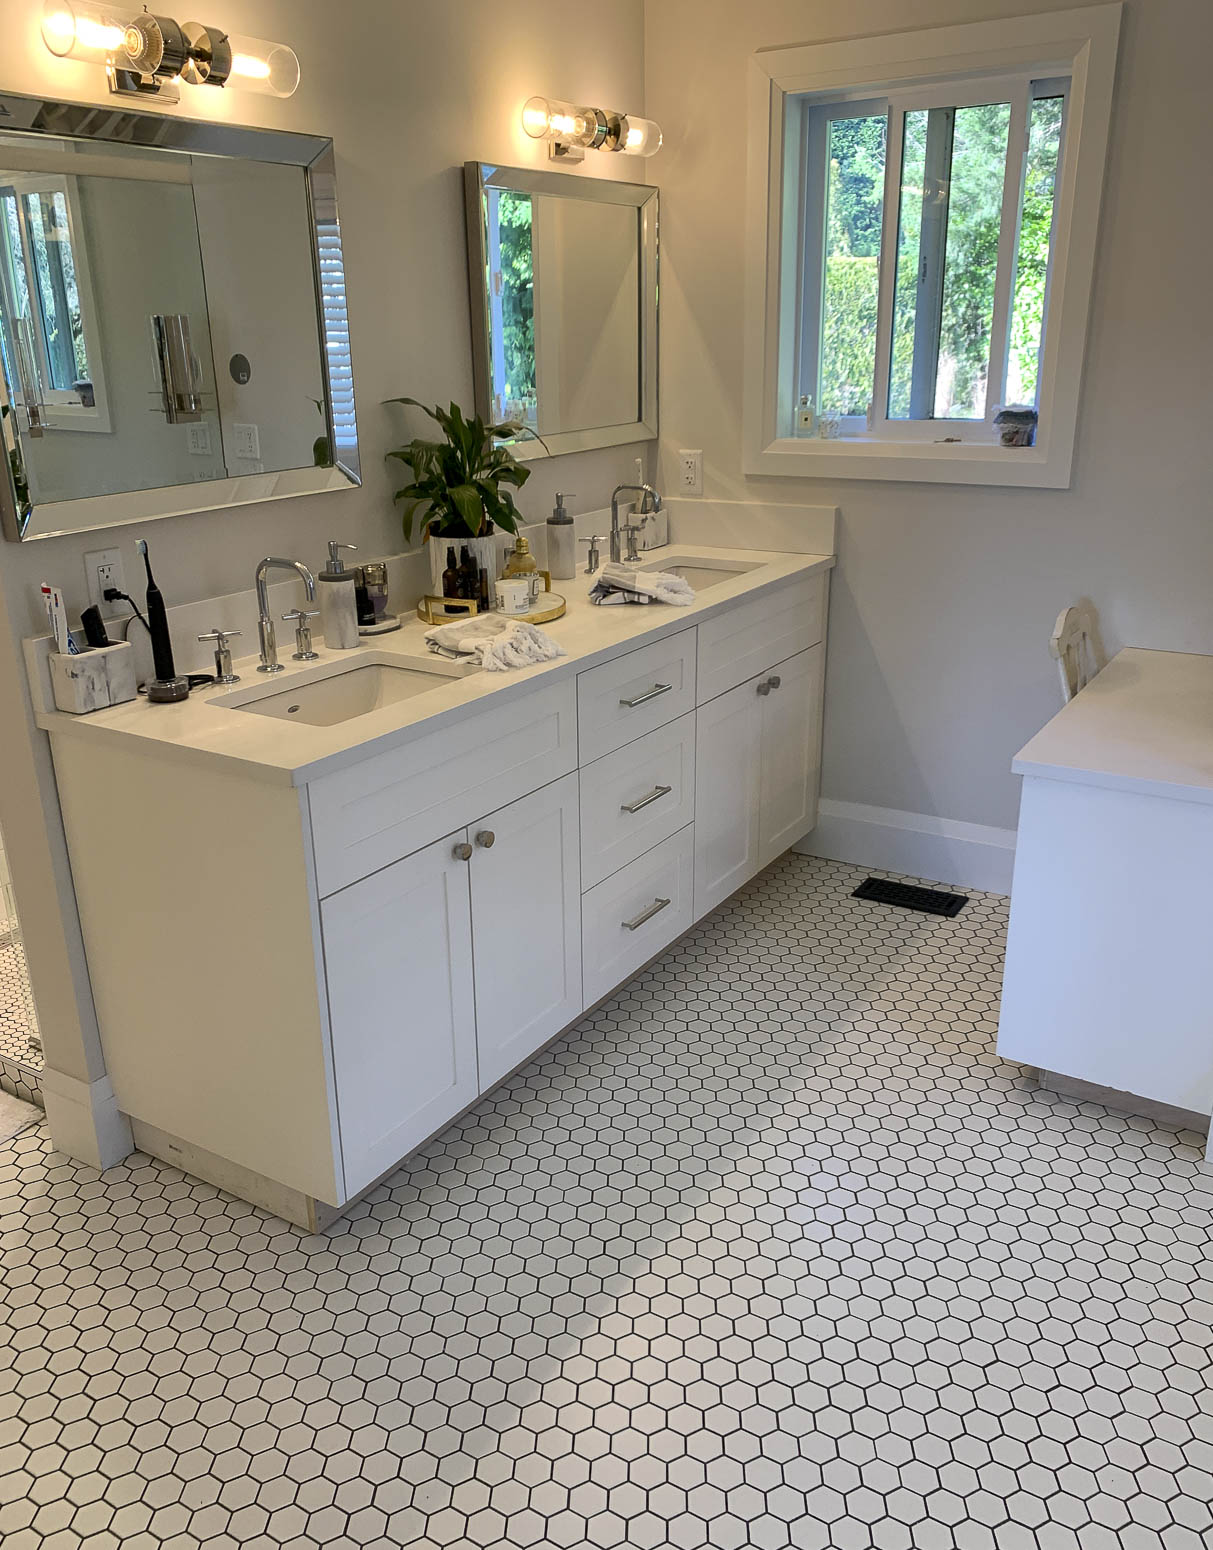 All-white modern bathroom with farmhouse features